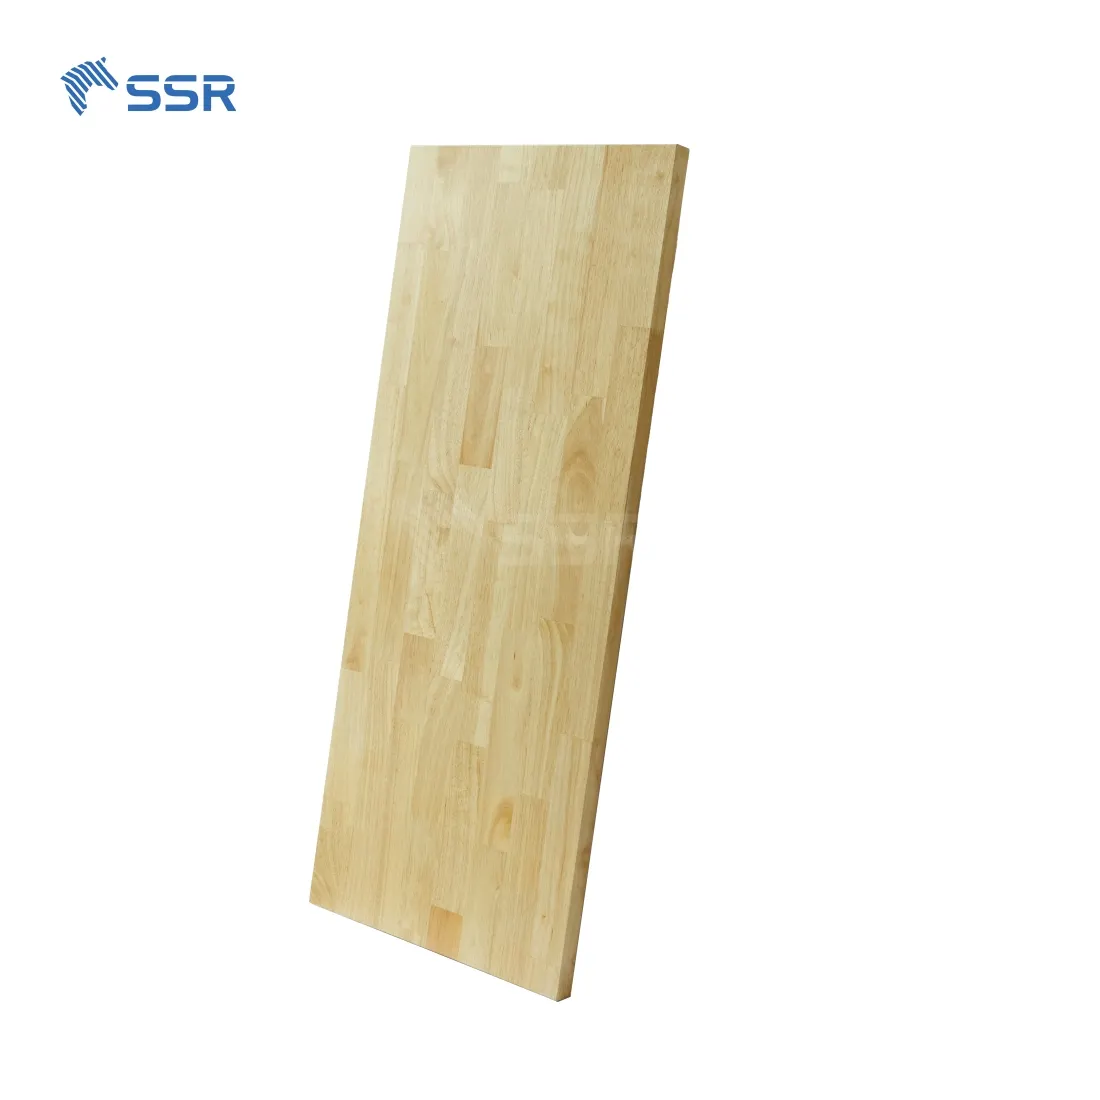 SSR VINA-Comptoir de bloc de boucher en bois d'hévéa (hévéa)-Comptoir de bloc de boucher-Comptoirs en bois de comptoir de table